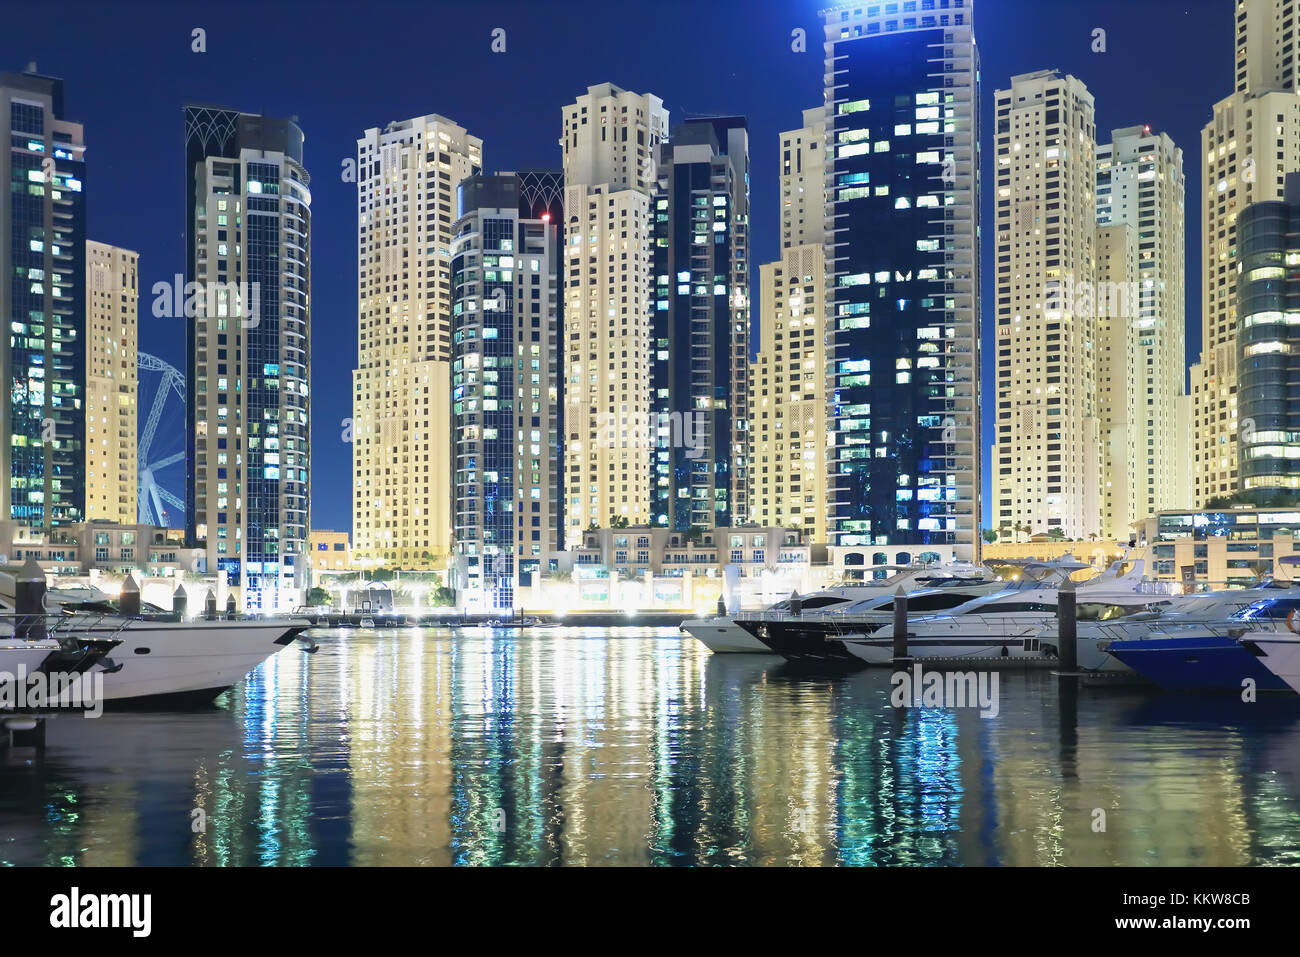 Luxury Dubai district with yachts and skyscrapers at night. Beautiful illumination of night Dubai cityscape. Stock Photo